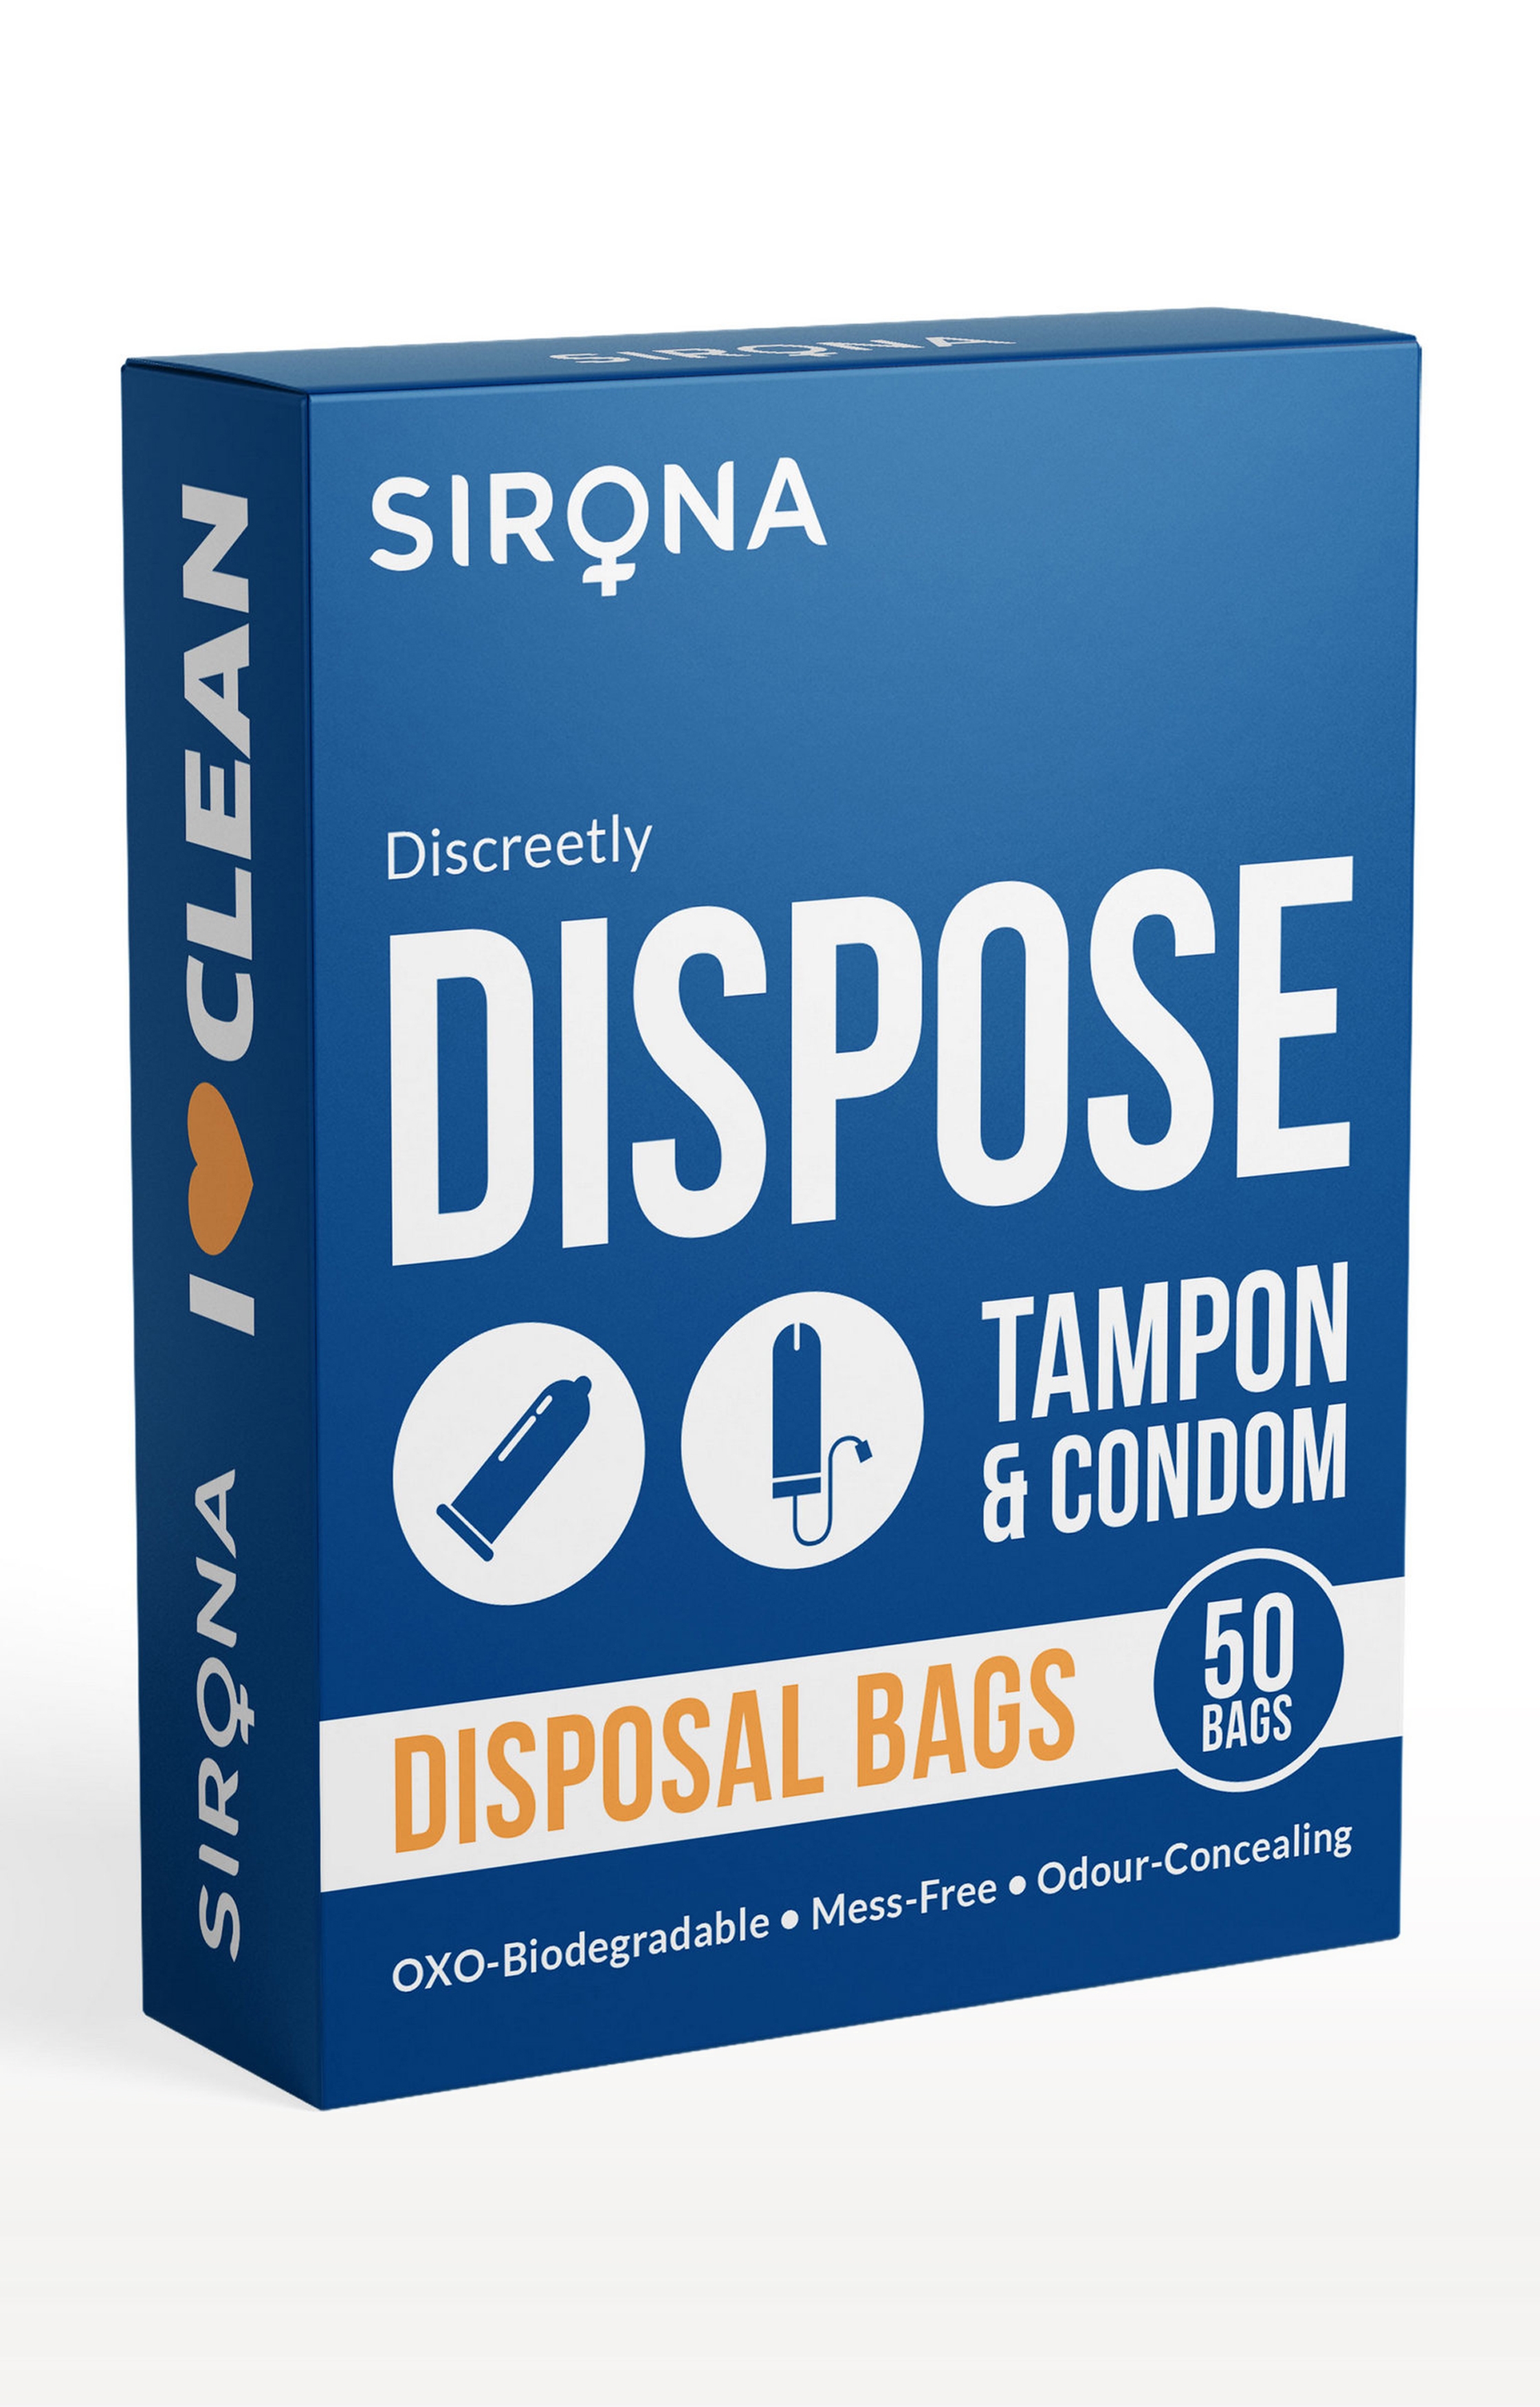 Sirona | Sirona Disposal Bags for Discreet Disposal of Tampons and Condoms 50 Bags